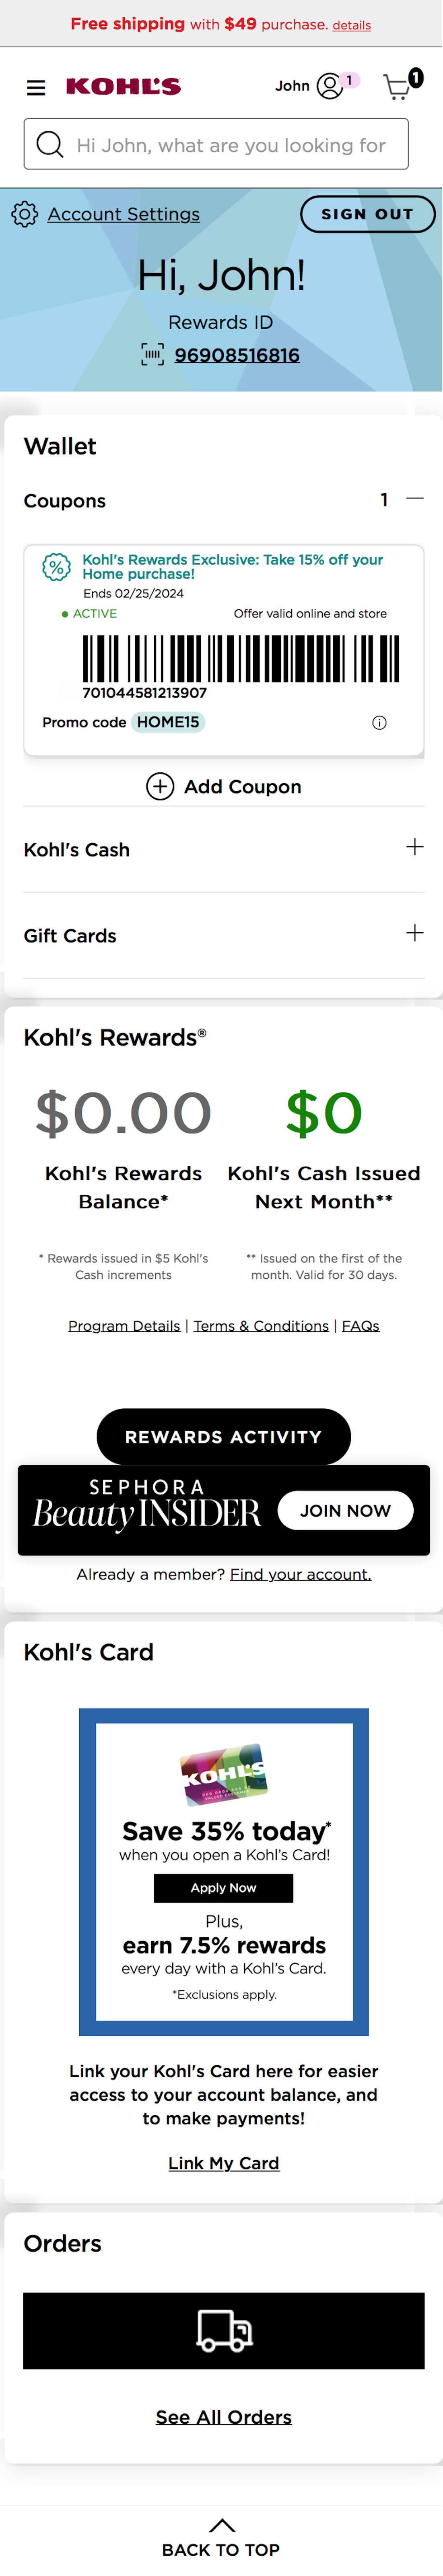 Mobile screenshot of Kohl’s